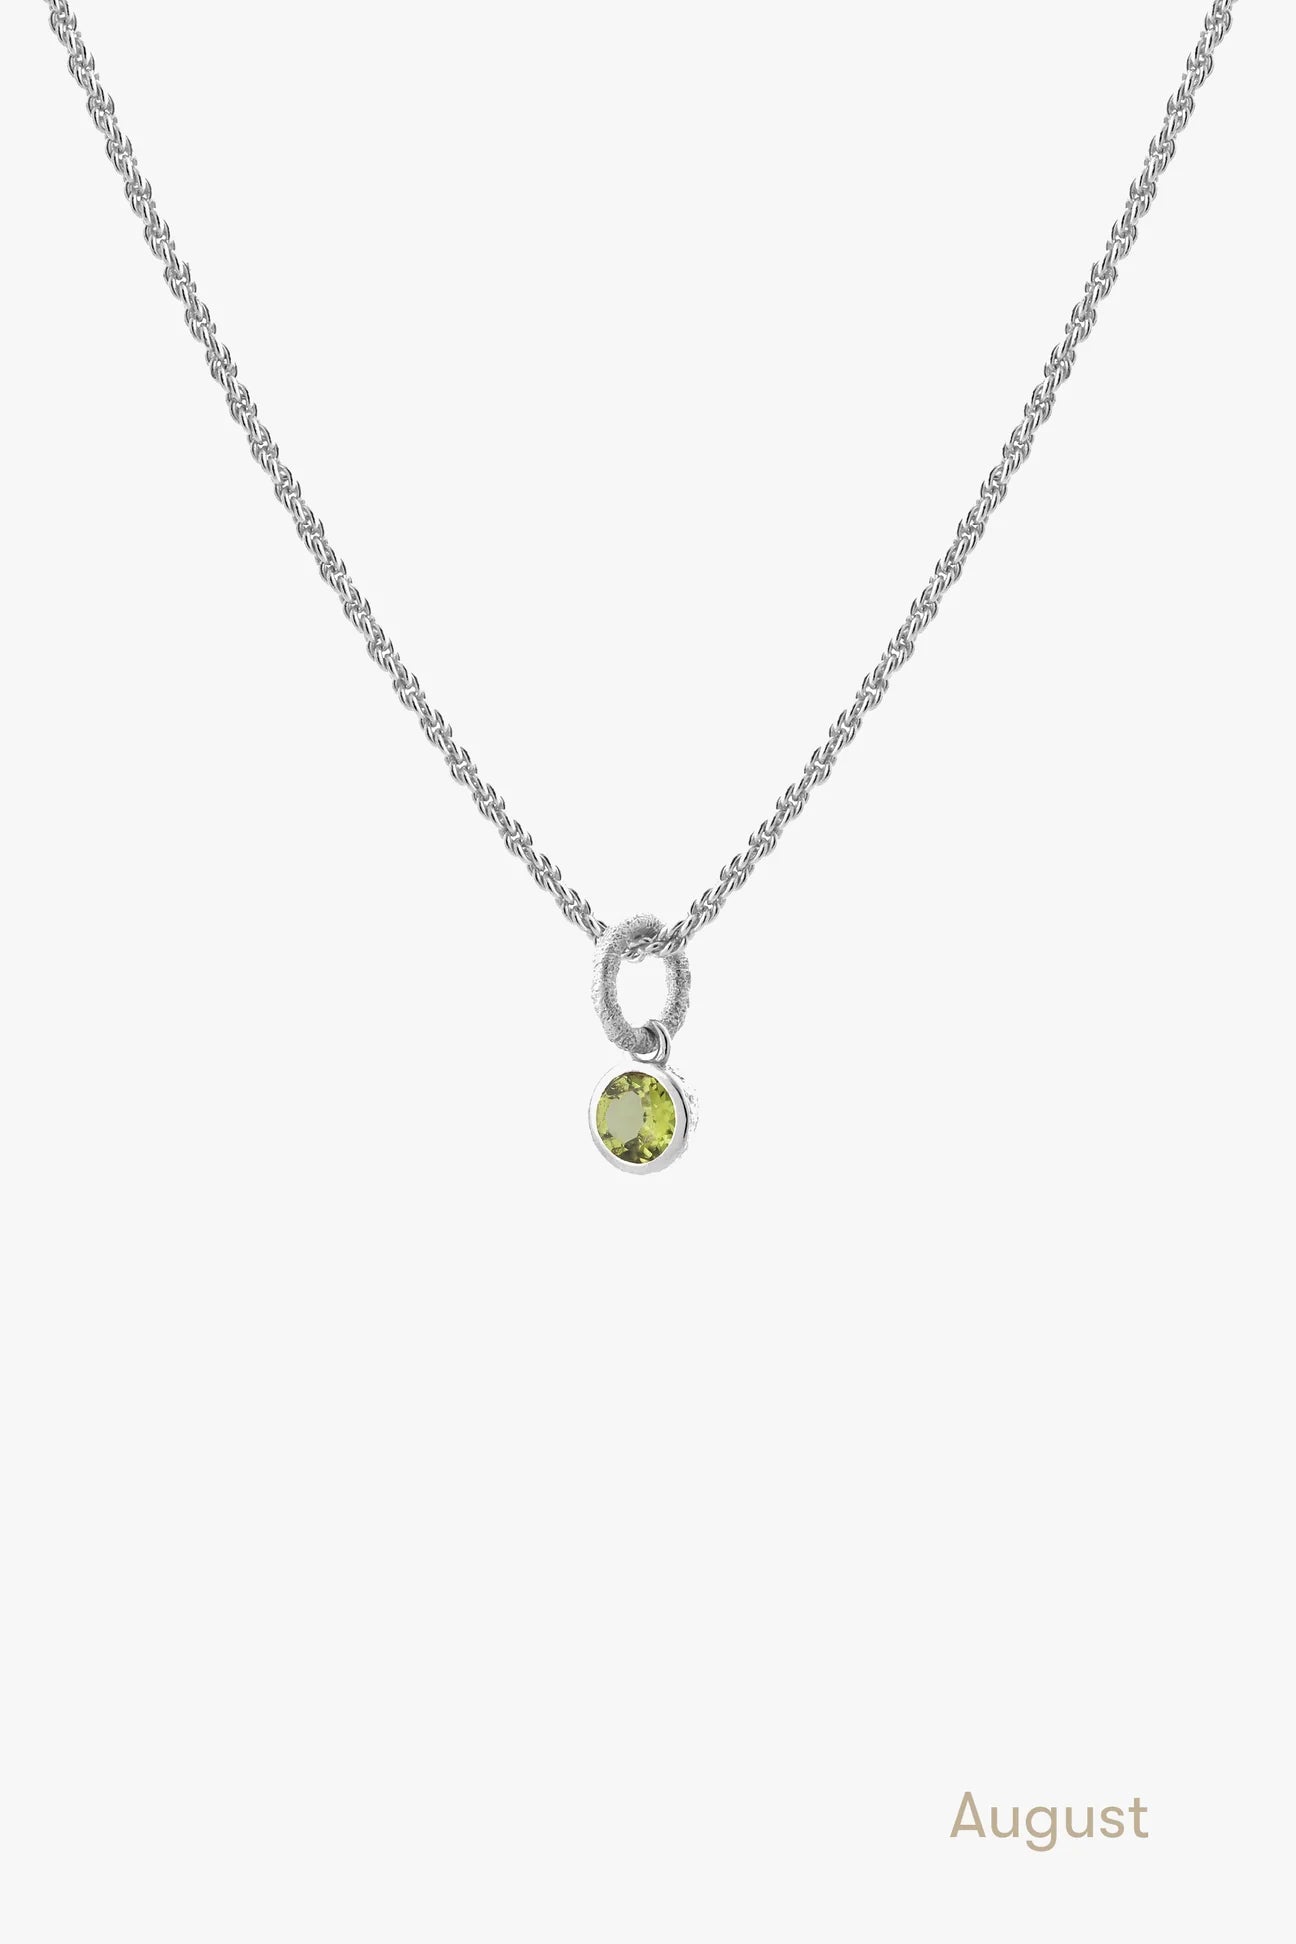 Peridot Birthstone Necklace Silver